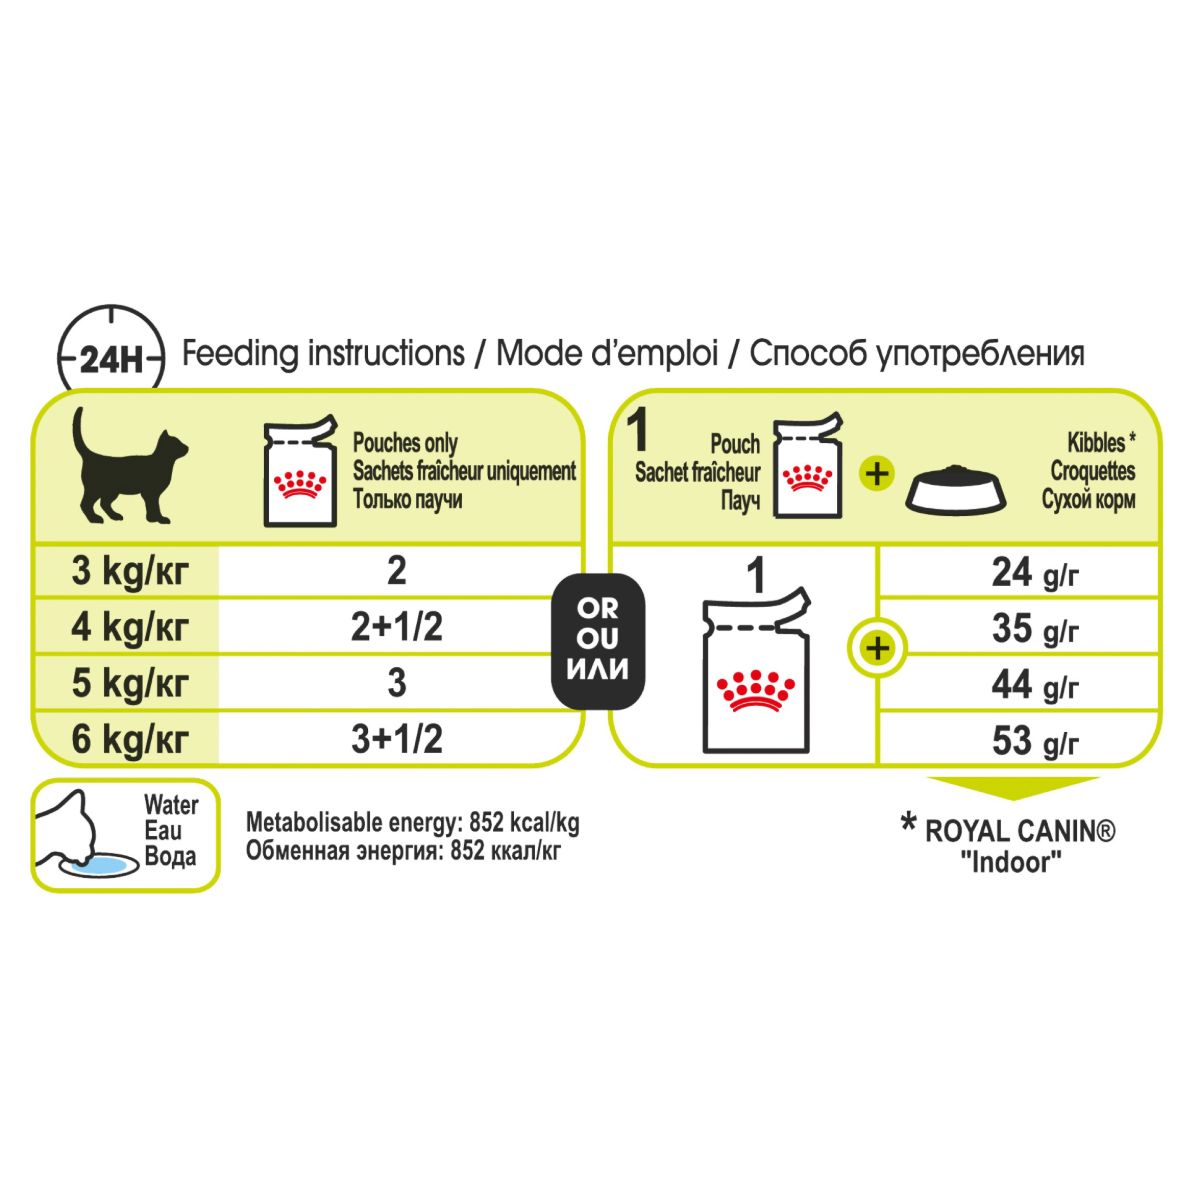 Royal Canin Sensory Smell Chunks in Gravy Wet Cat Food 85G